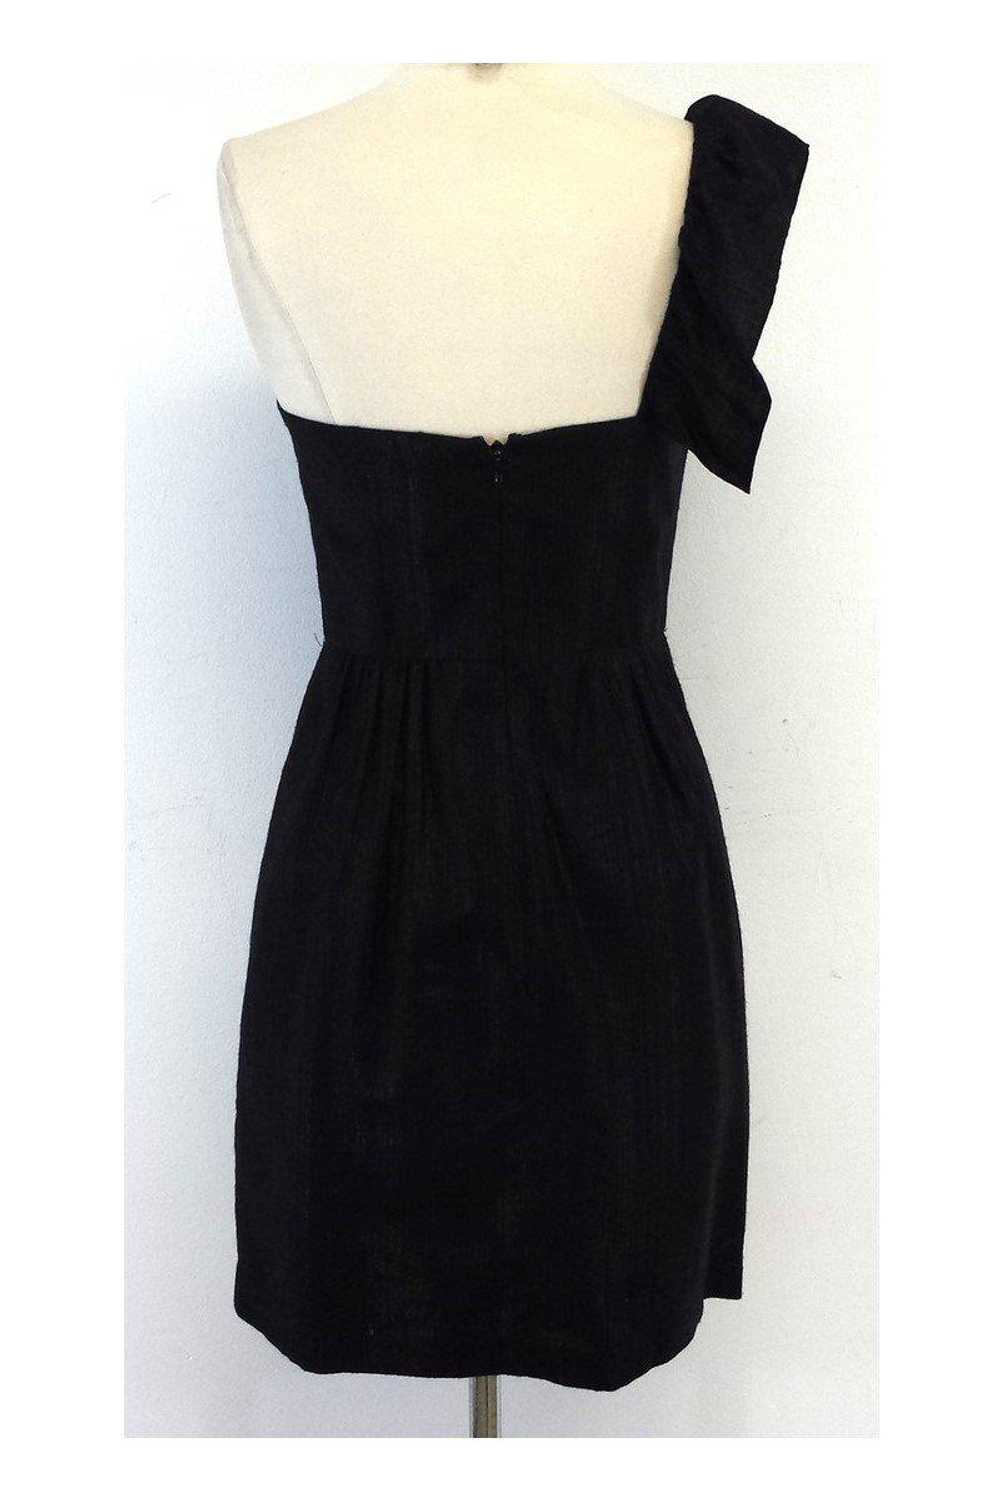 Milly - Metallic Black One Shoulder Dress Sz 2 - image 3